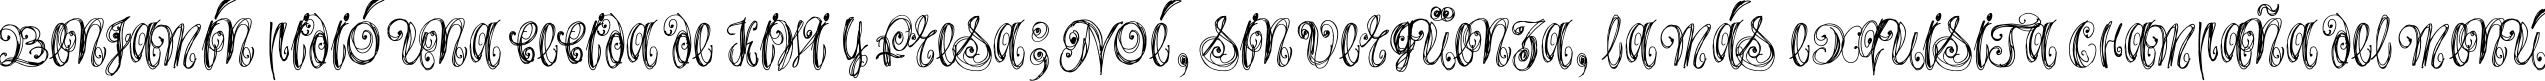 Пример написания шрифтом Airy текста на испанском